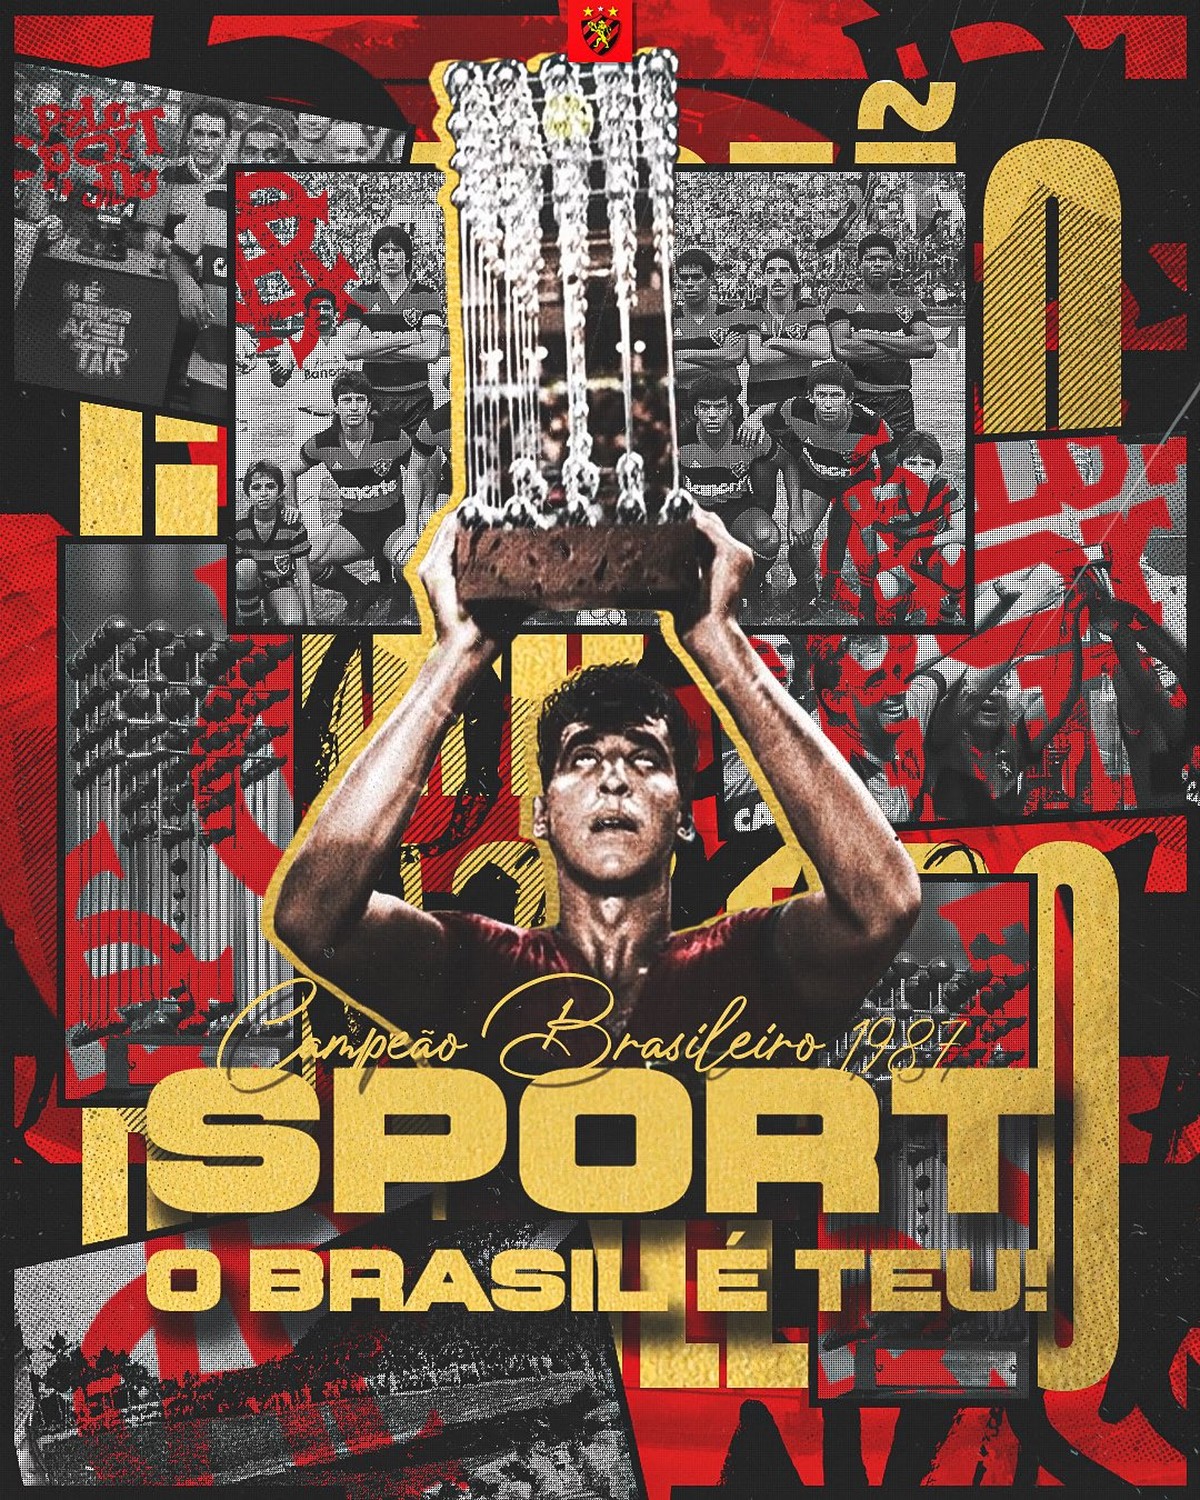 87º Campeonato Brasileiro de Xadrez: O Mais Animado da Última Década